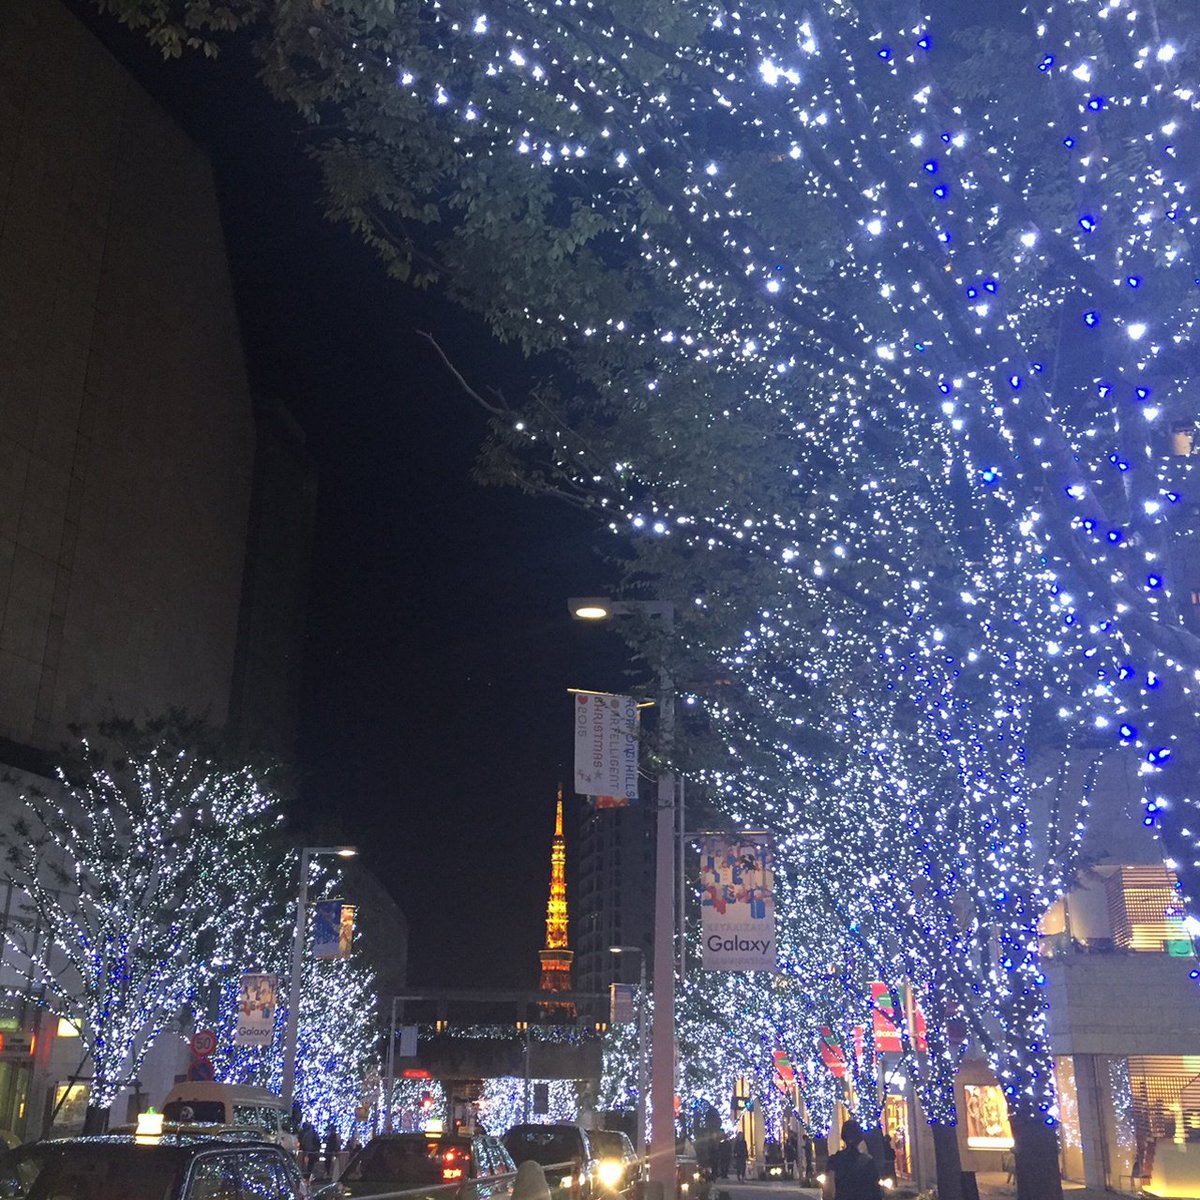 Grand Hyatt Tokyo 六本木ヒルズ けやき坂のクリスマスイルミネーションが始まりました 毎時00分からと30分から 赤色に変わります ぜひ見にいらしてください クリスマスイルミネーション けやき坂 グランドハイアット東京 T Co Ihtixv8ckb